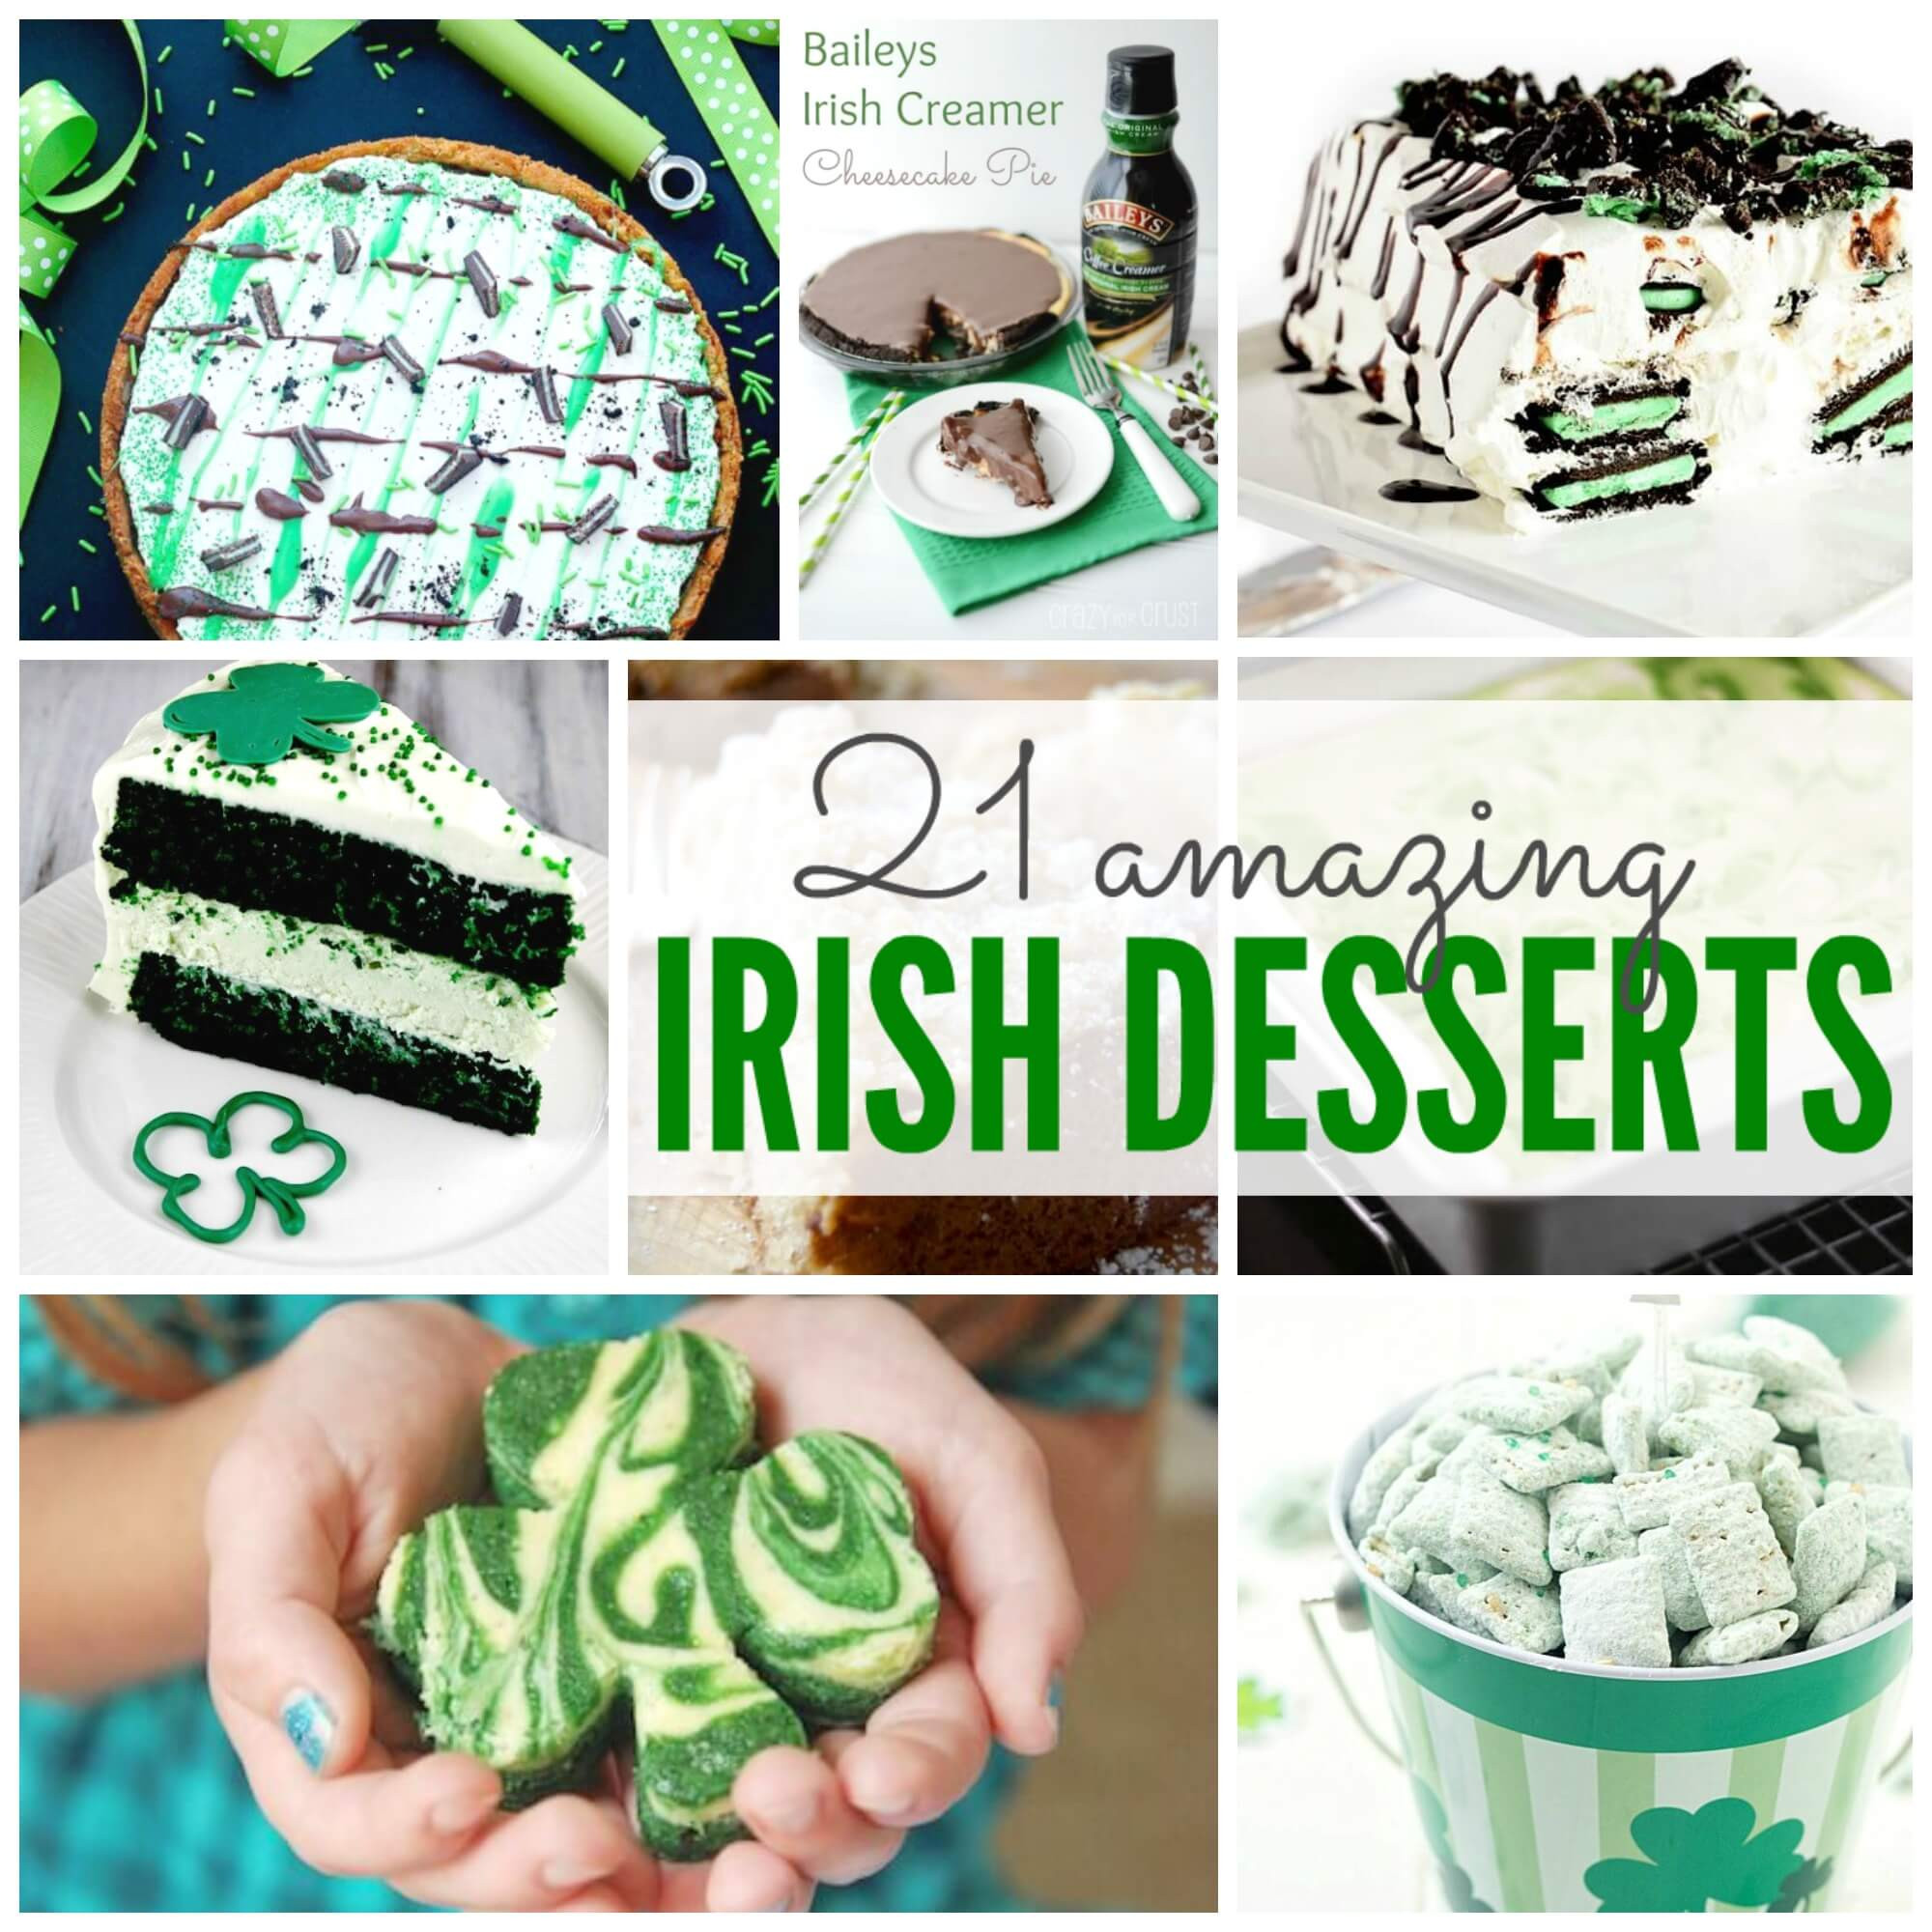 Irish Desserts For Kids
 21 Amazing Irish Desserts that are Simple & Easy to Make